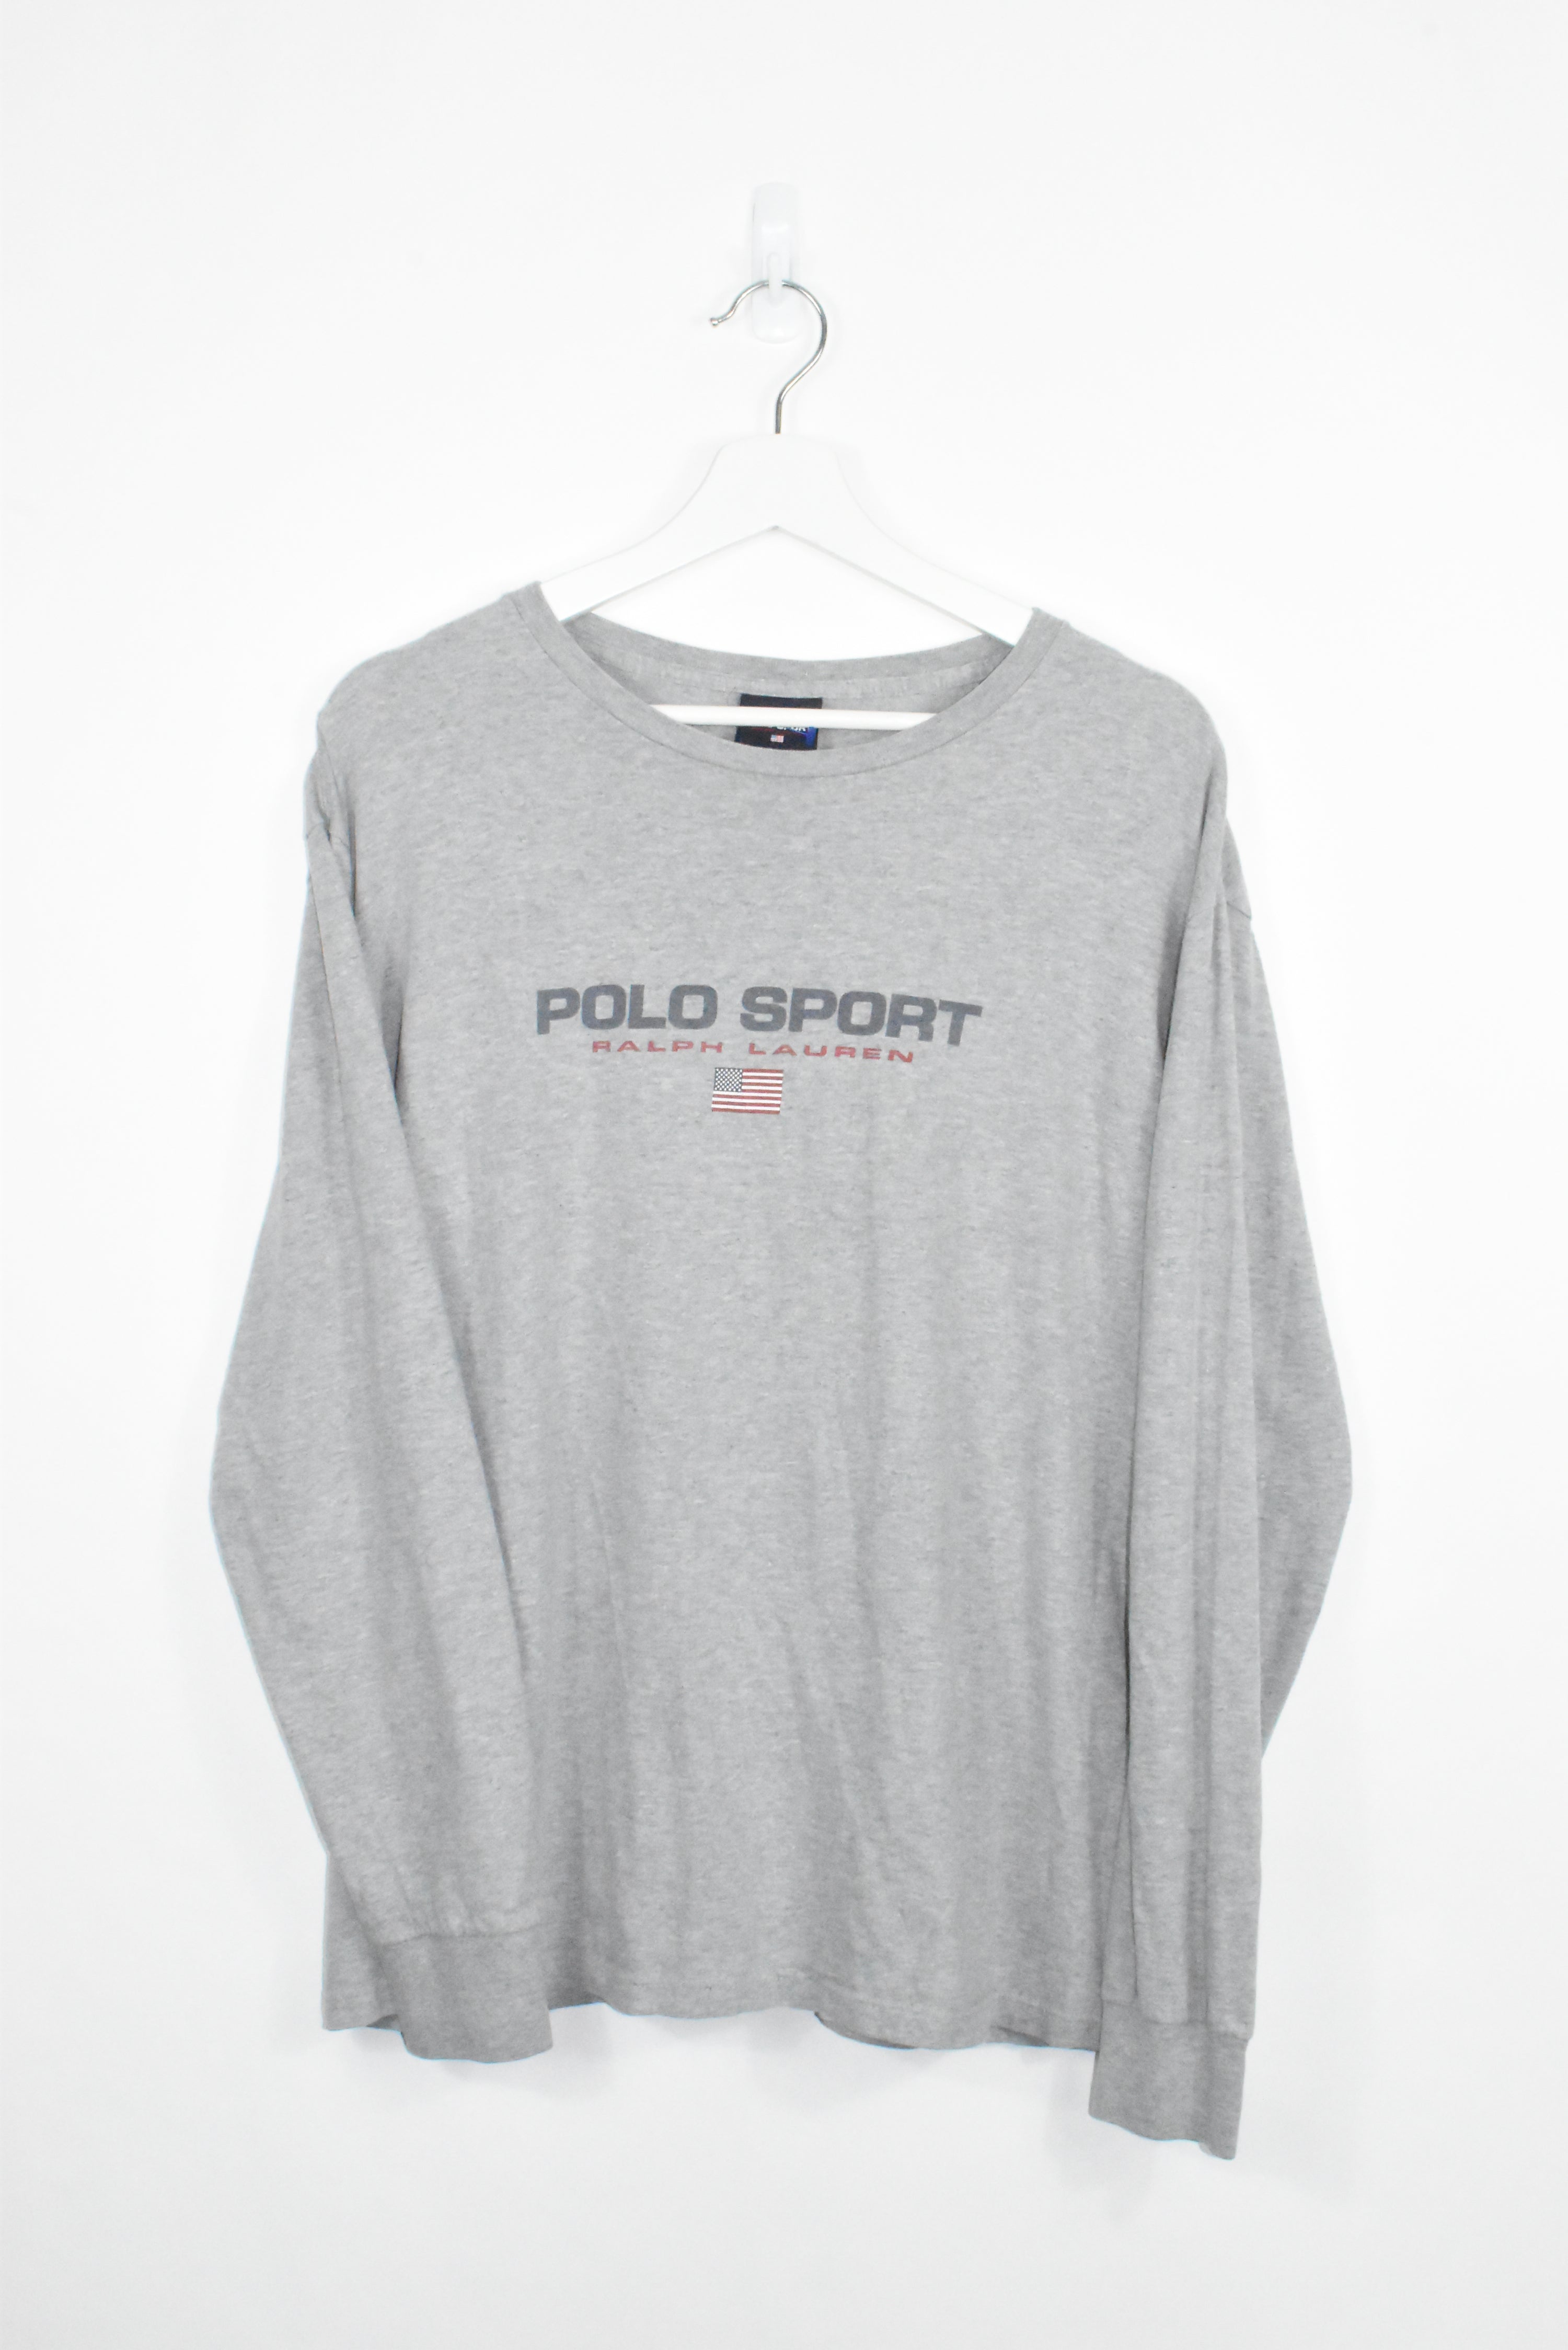 Vintage Polo Sport Ralph Lauren Long Sleeve L - REVIVED Vintage est. 2020